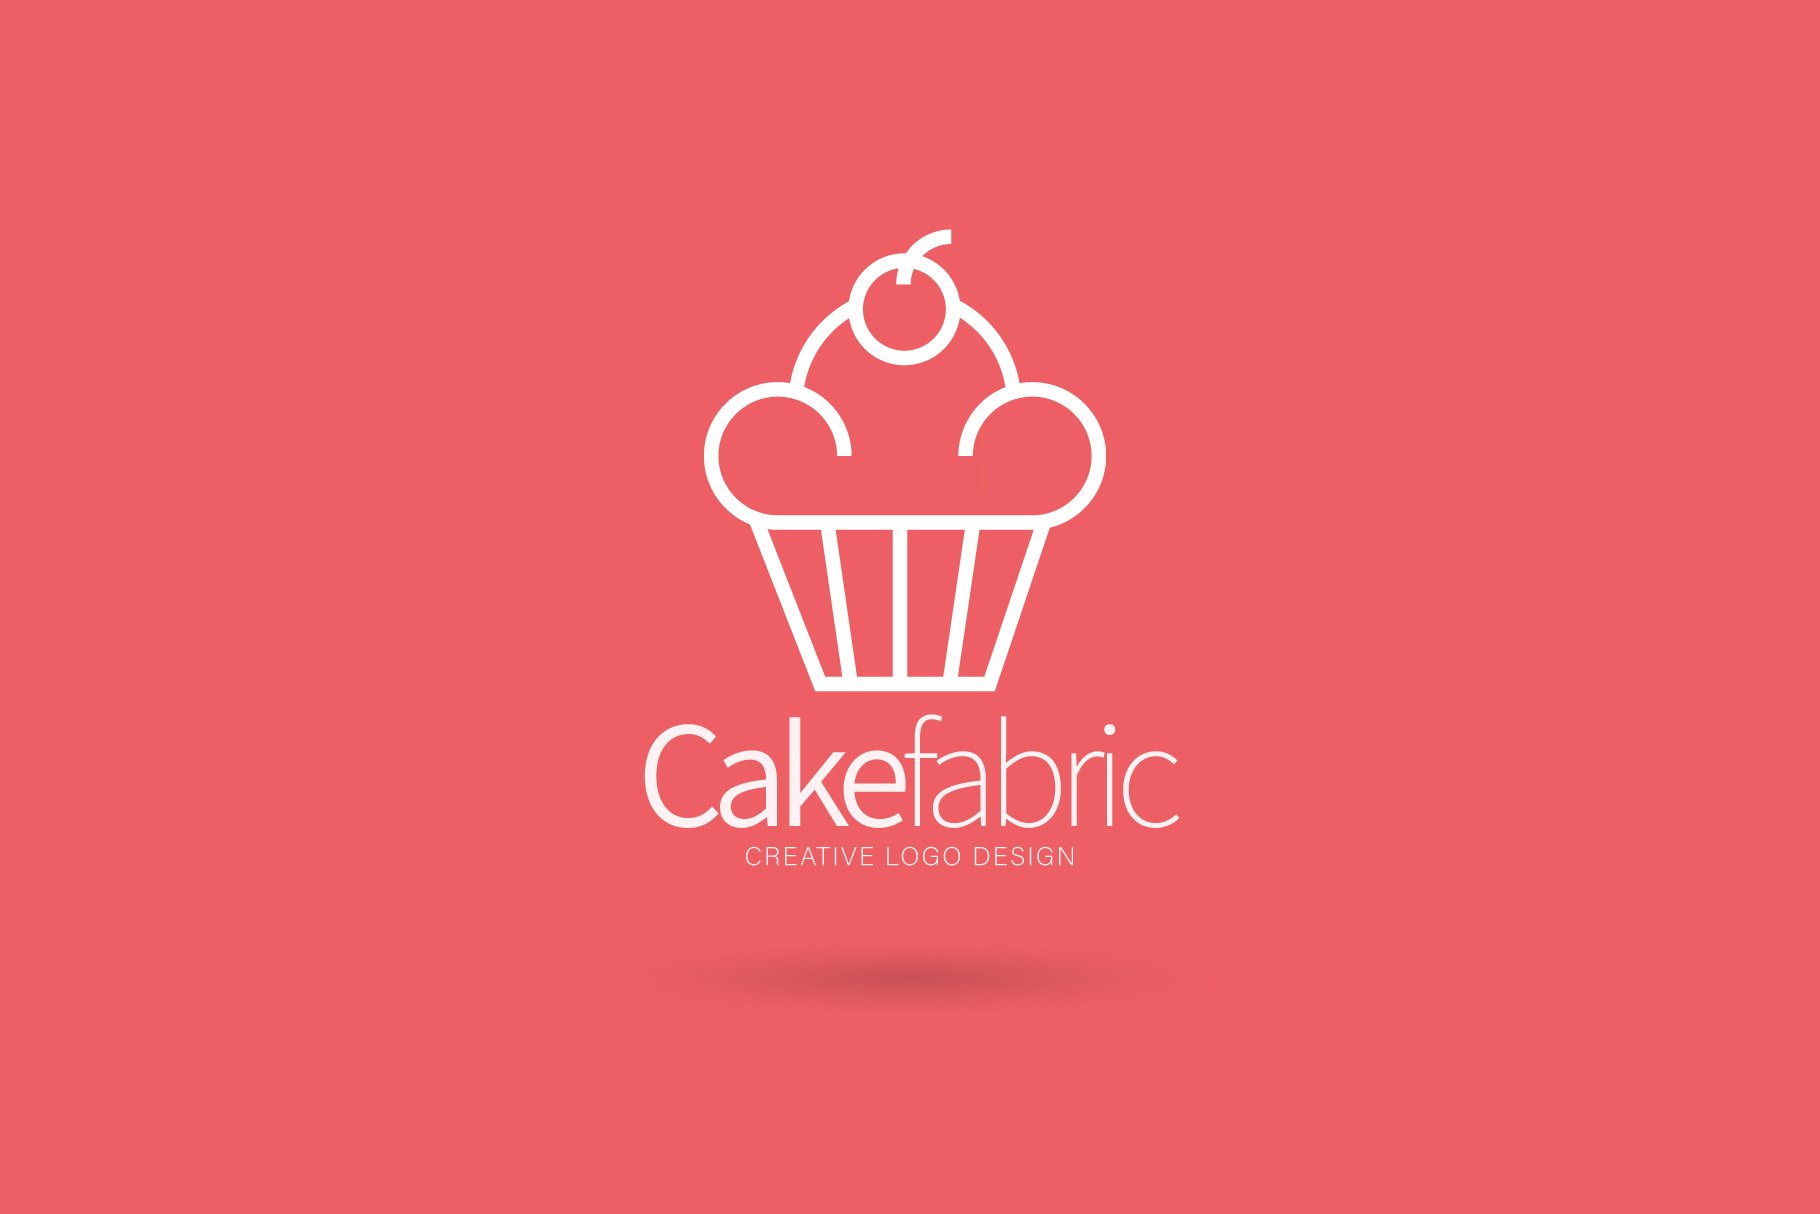 Cake logo, Bakery logo preview image.